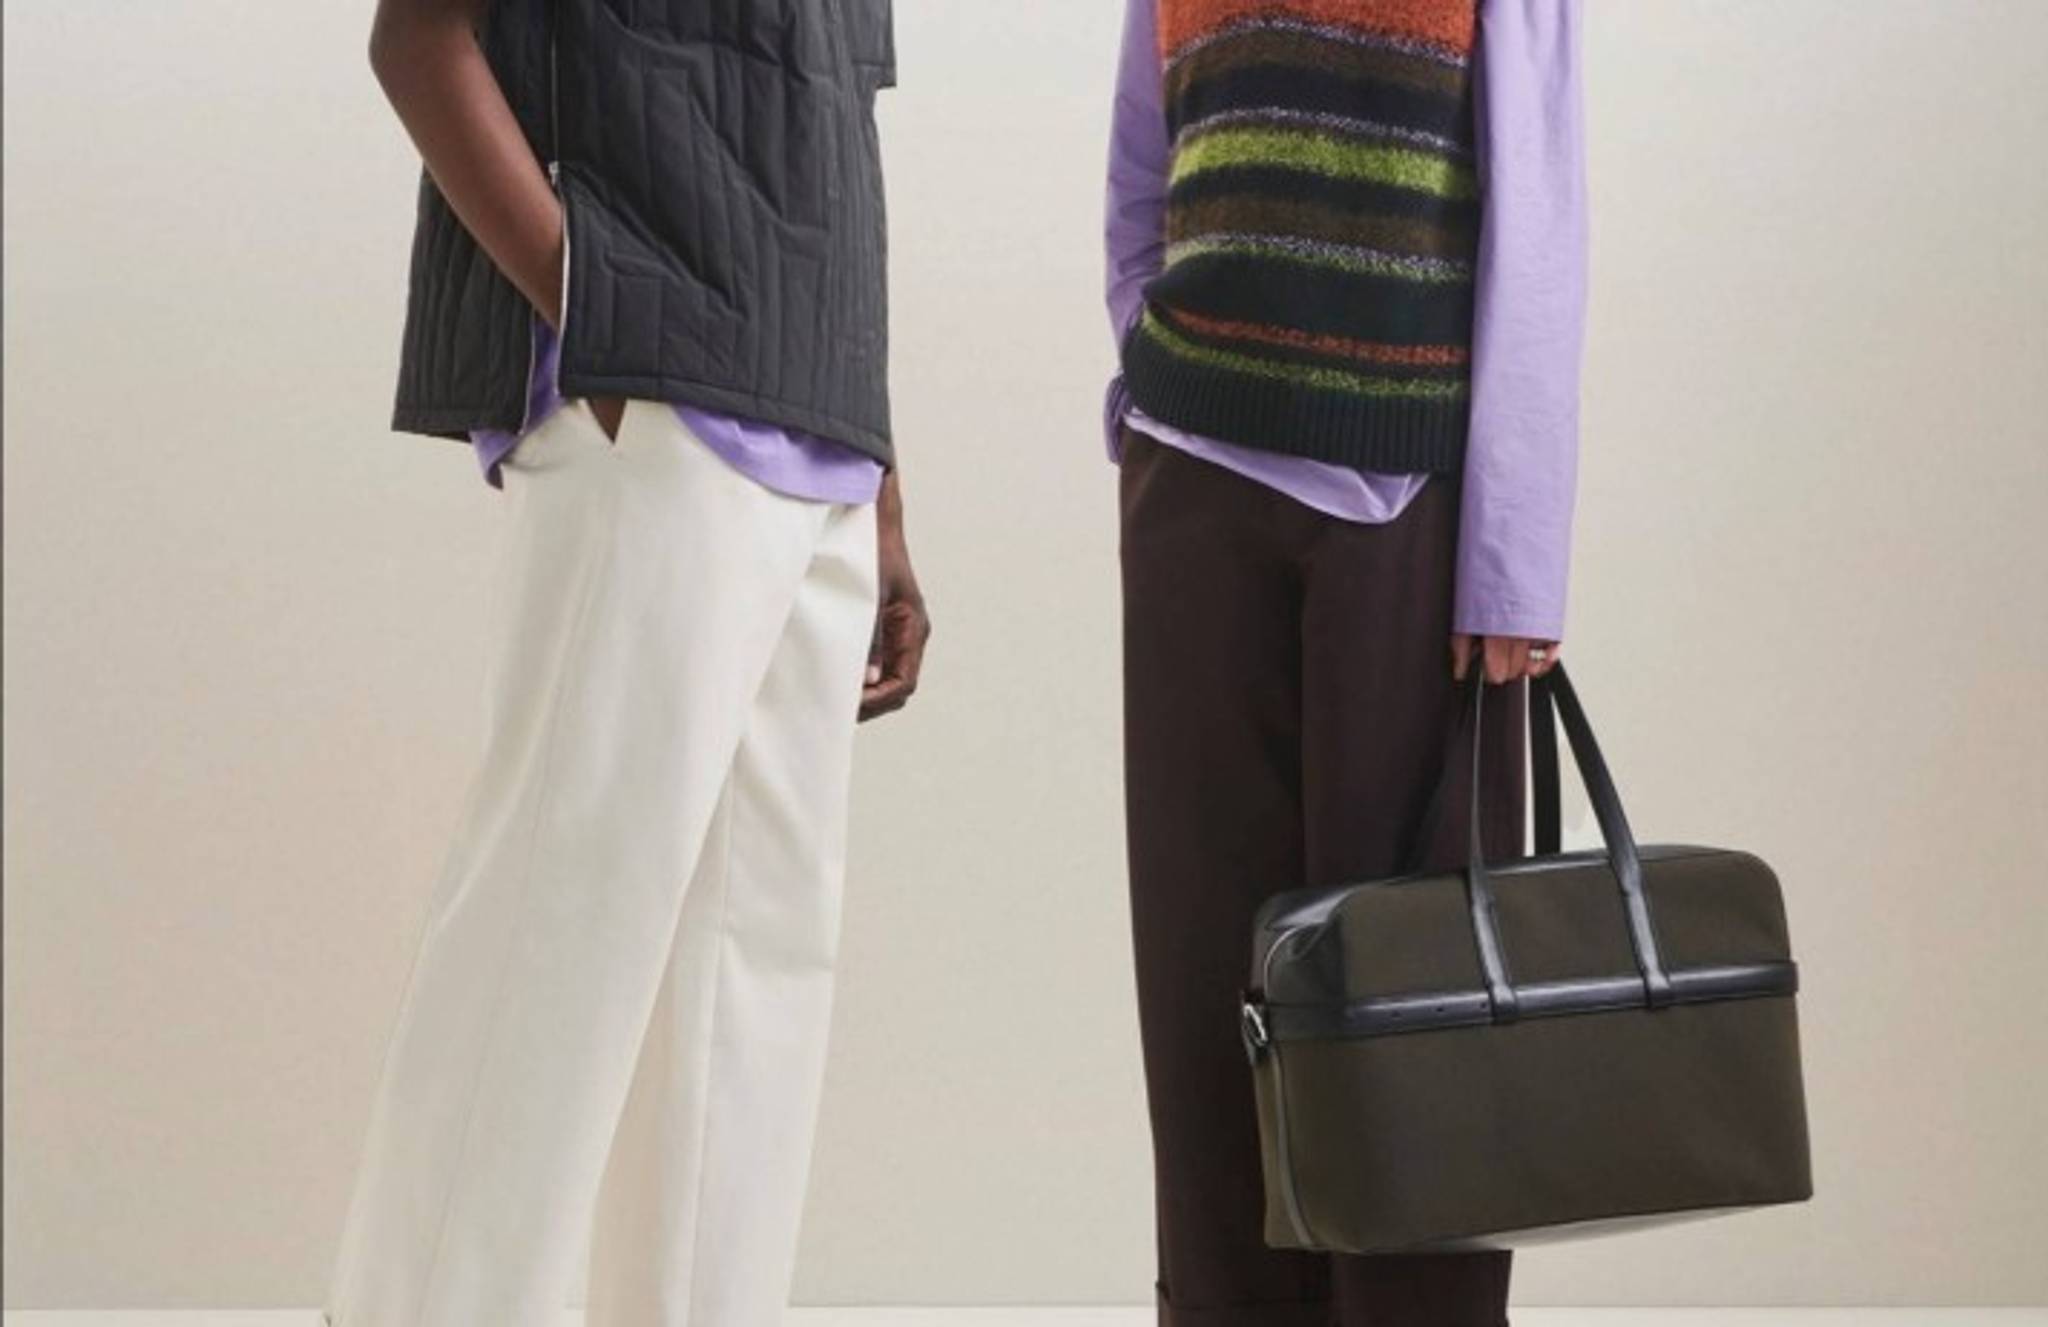 Hermès embraces ethical luxury with mushroom bag